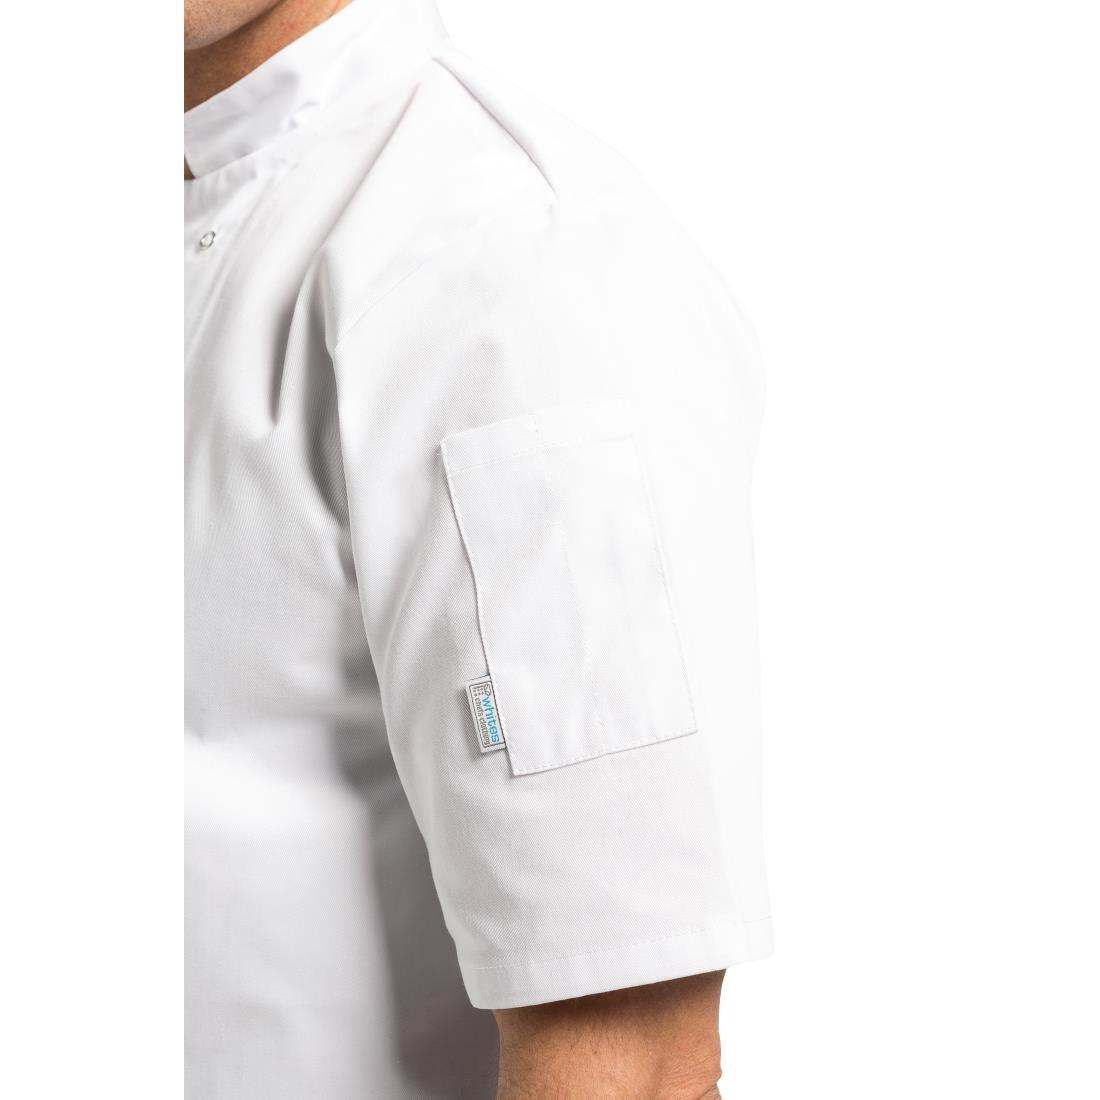 Whites Vegas Unisex Chefs Jacket Short Sleeve White - HospoStore